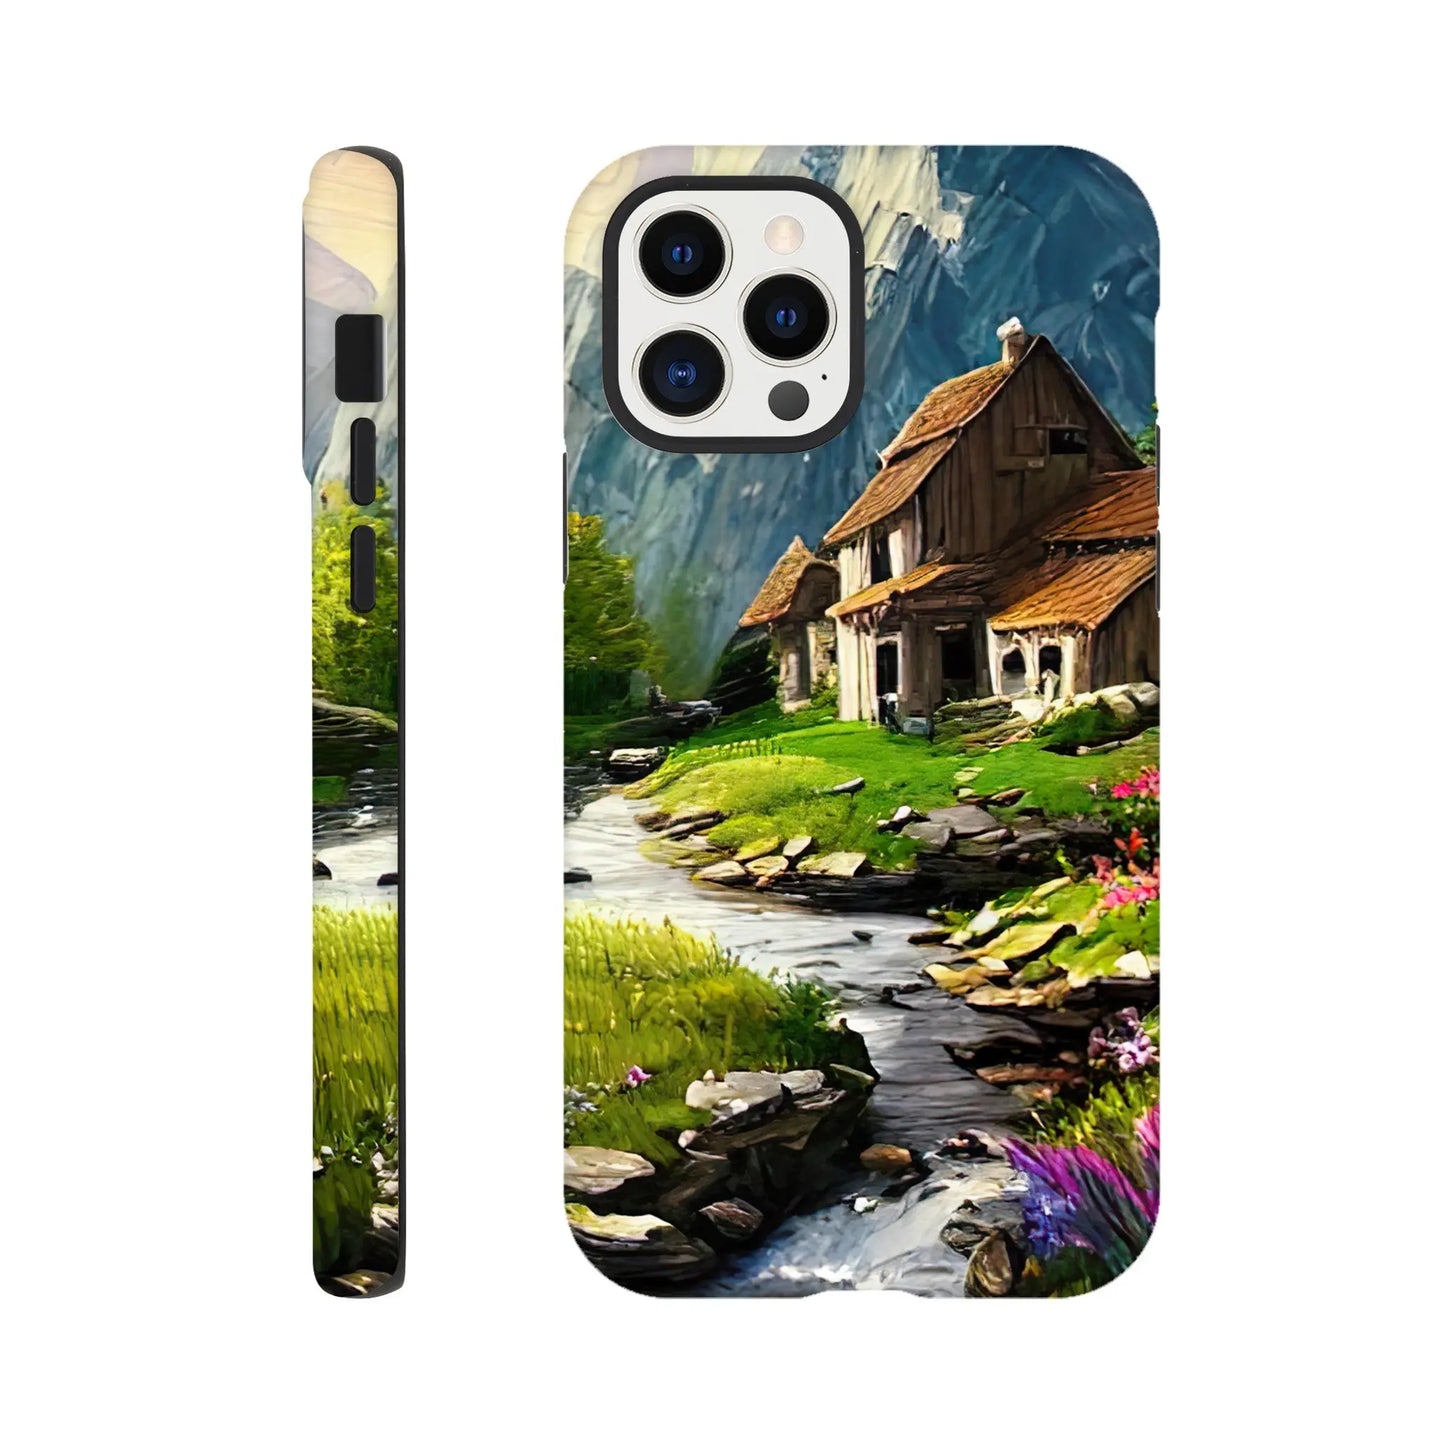 Smartphone-Hülle "Hart" - Berglandschaft - Malerischer Stil, KI-Kunst RolConArt, Landschaften, iPhone-12-Pro